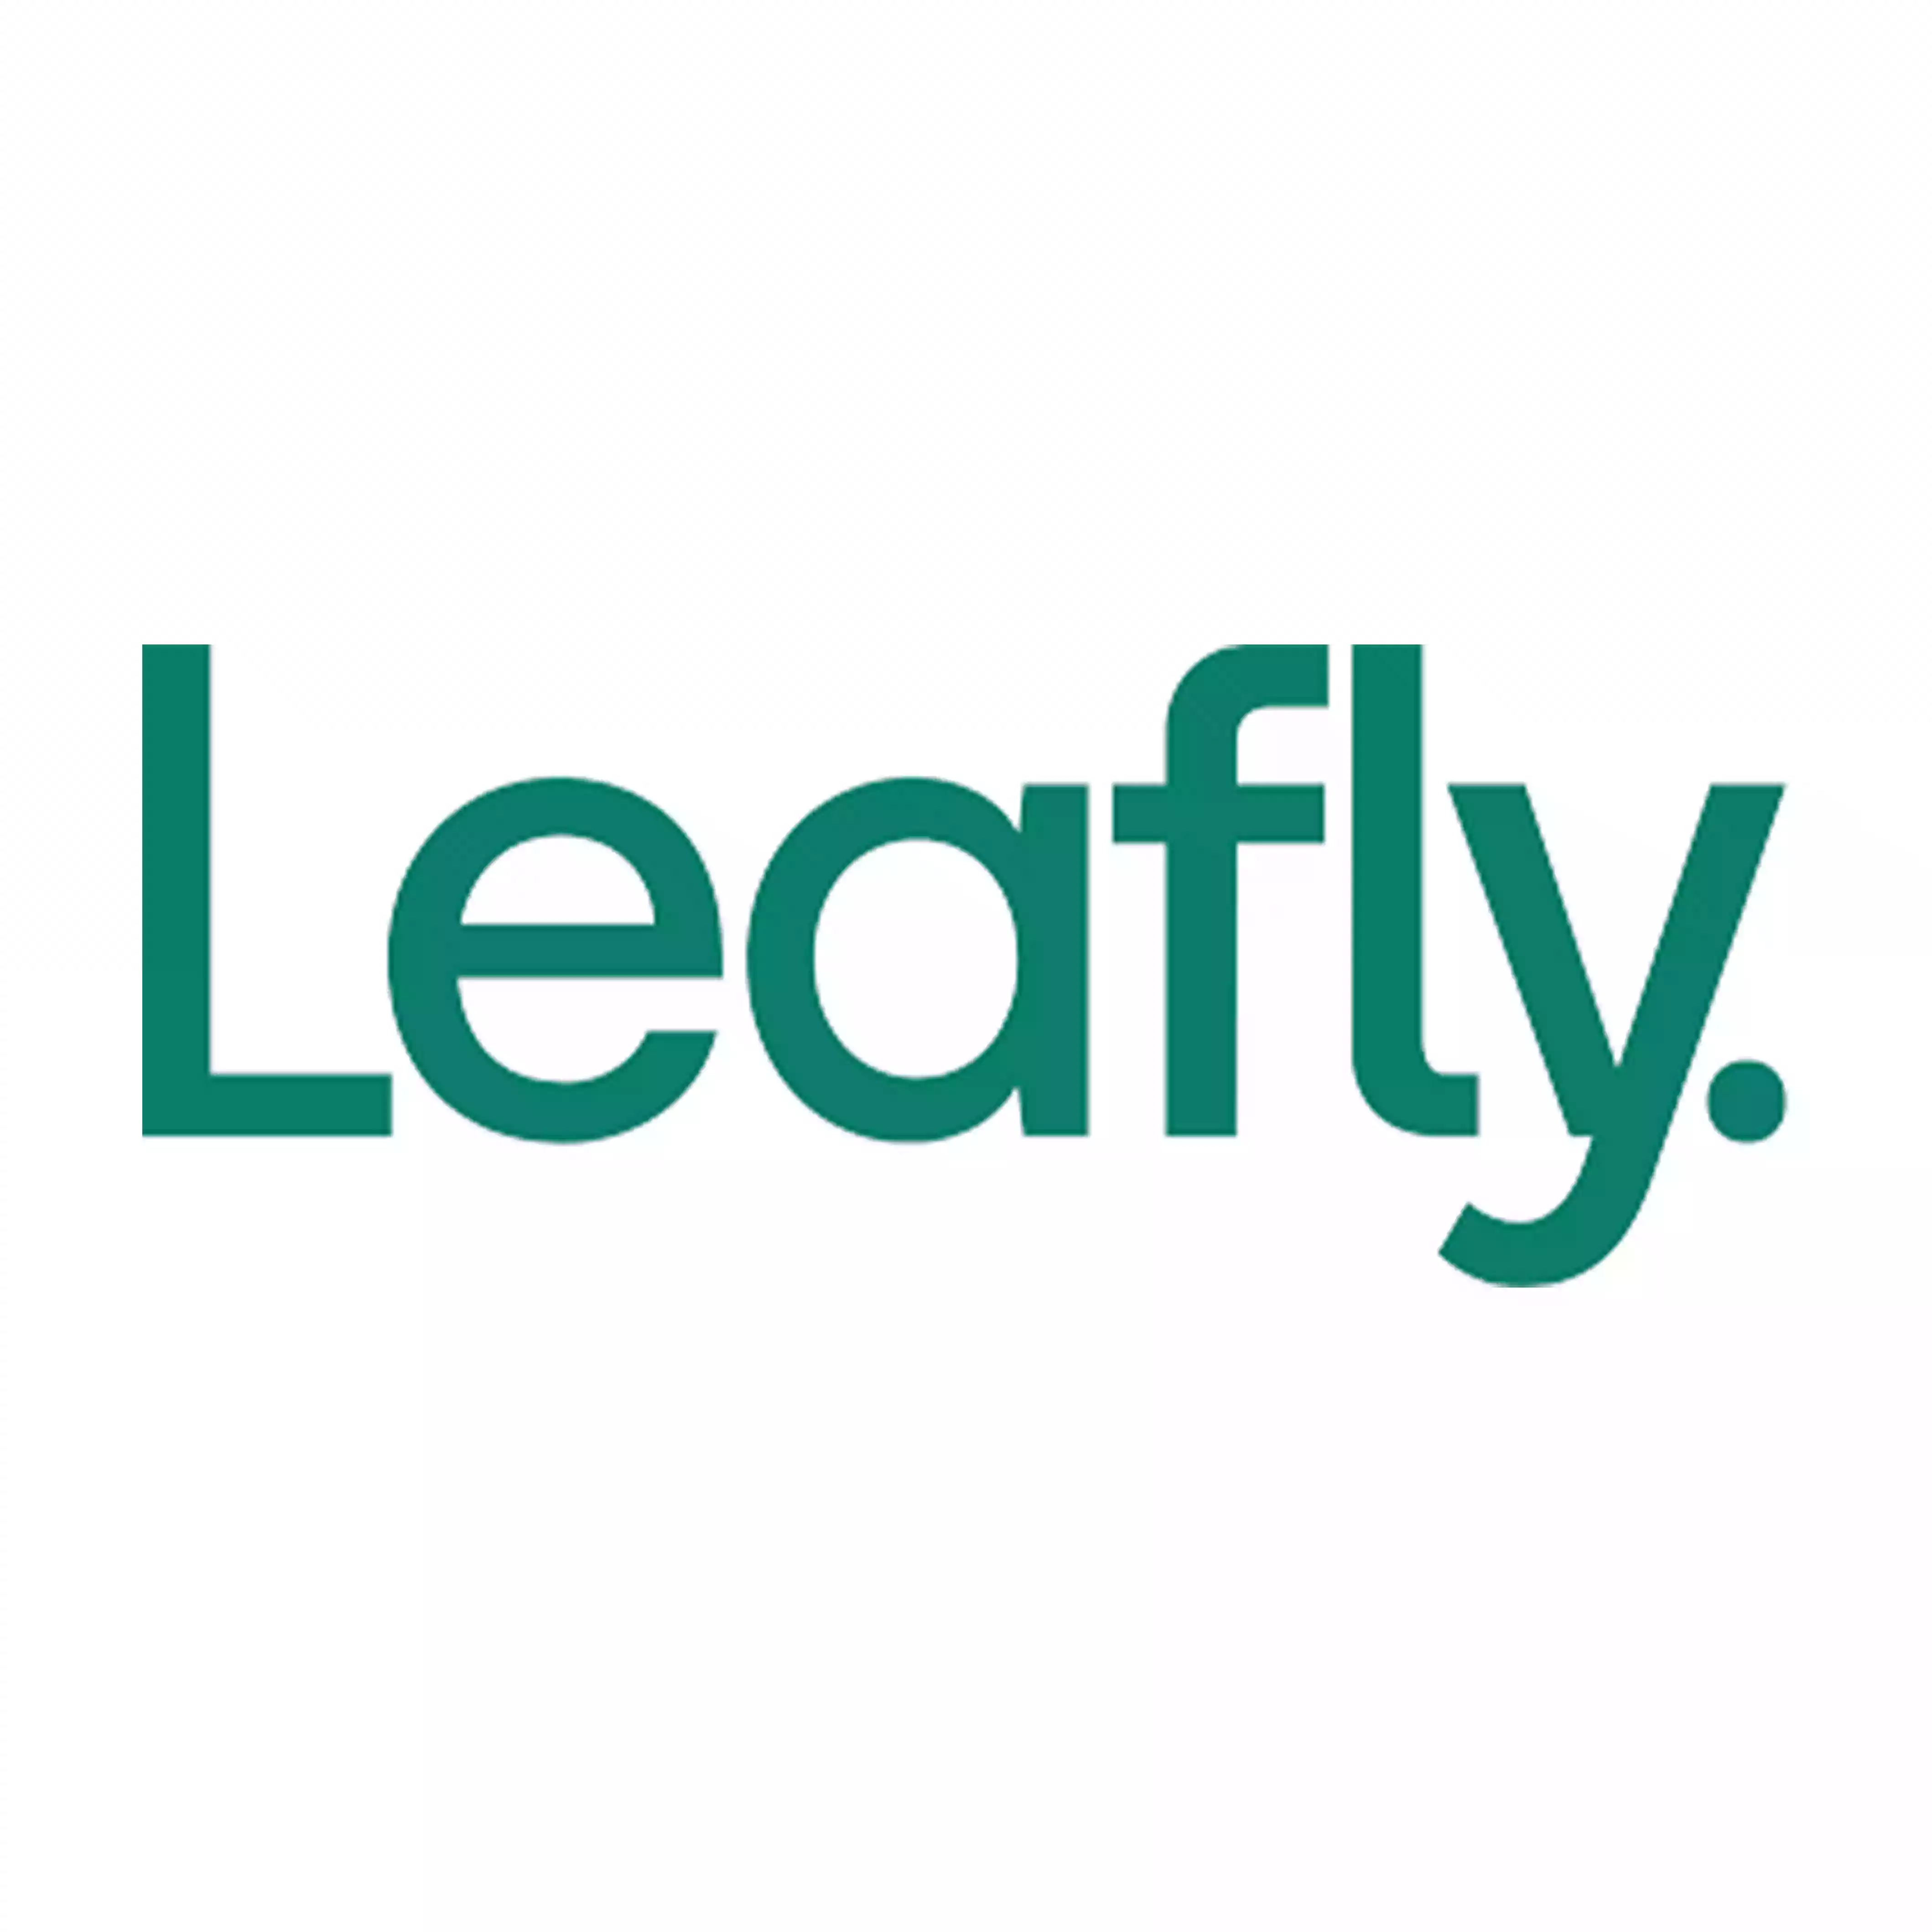 Shop Leafly logo